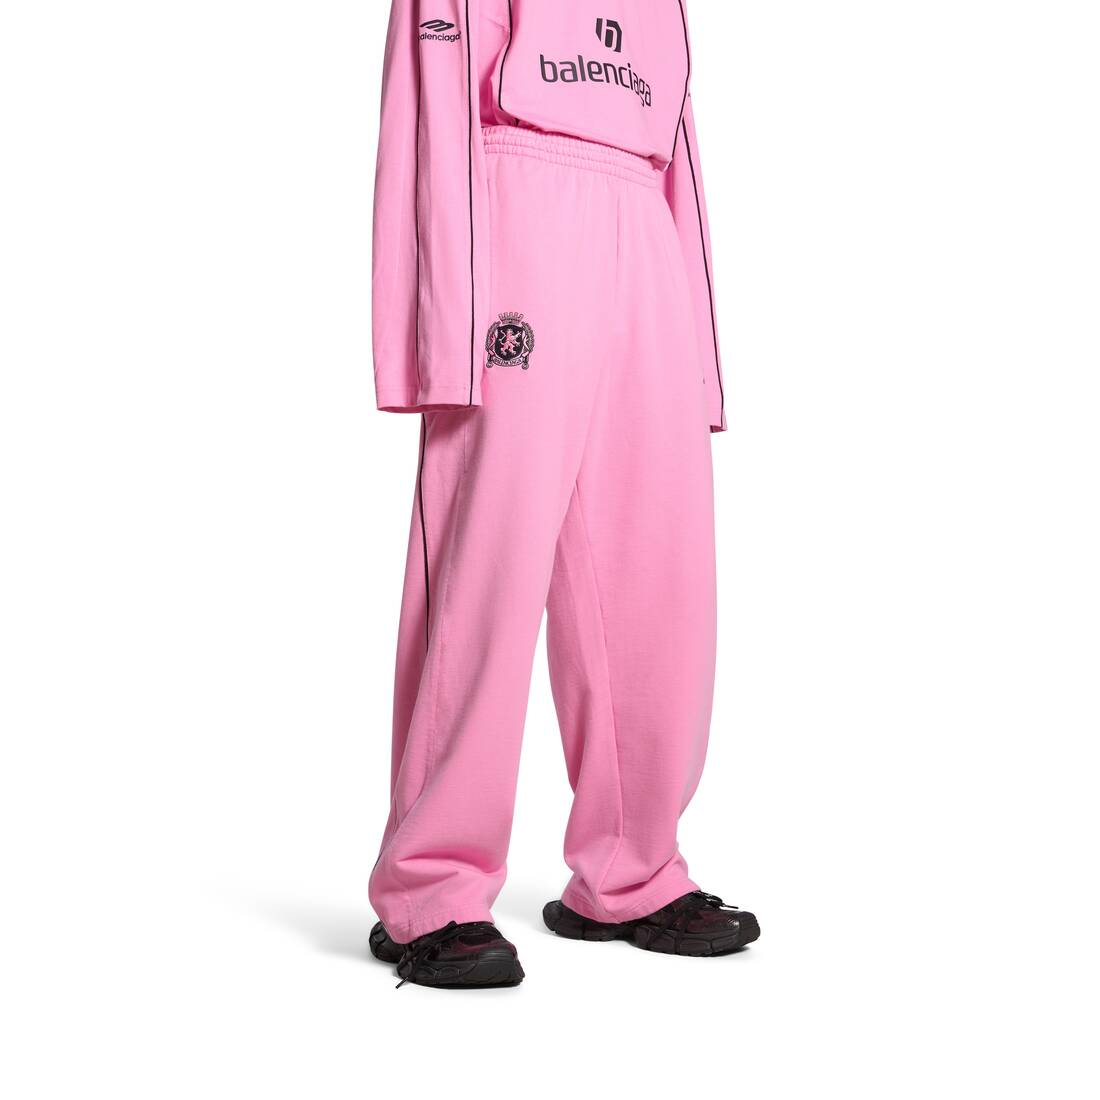 Soccer Baggy Sweatpants in Pink/black